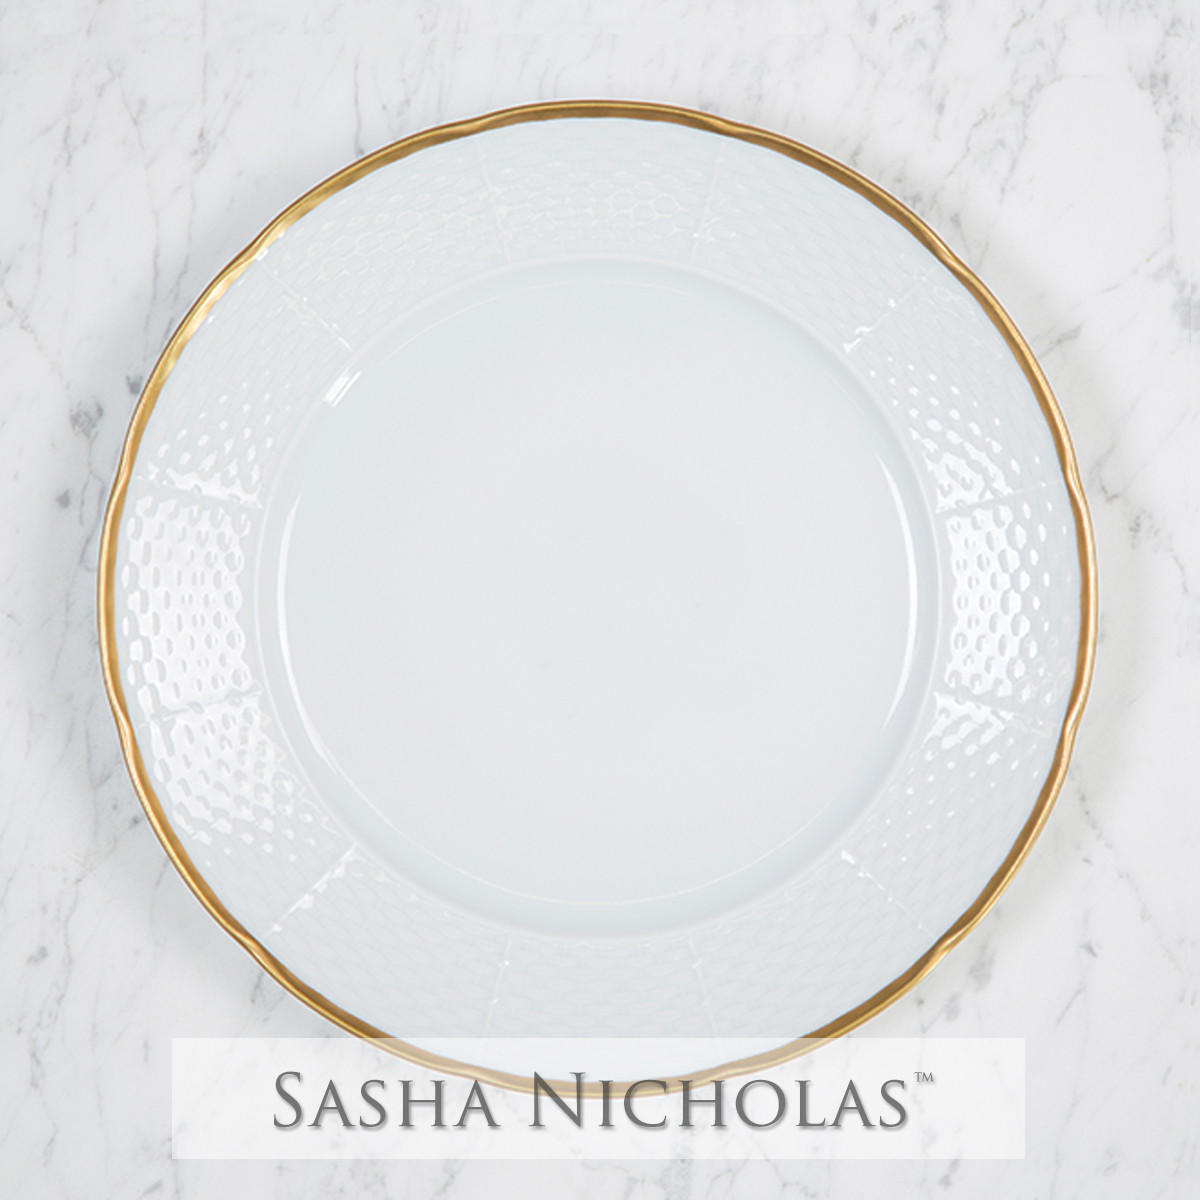 Mason-healy Weave 24k Gold Dinner Plate Sku-1f7d640b, Mason-Healy SKU-1F7D640B, Sasha Nicholas